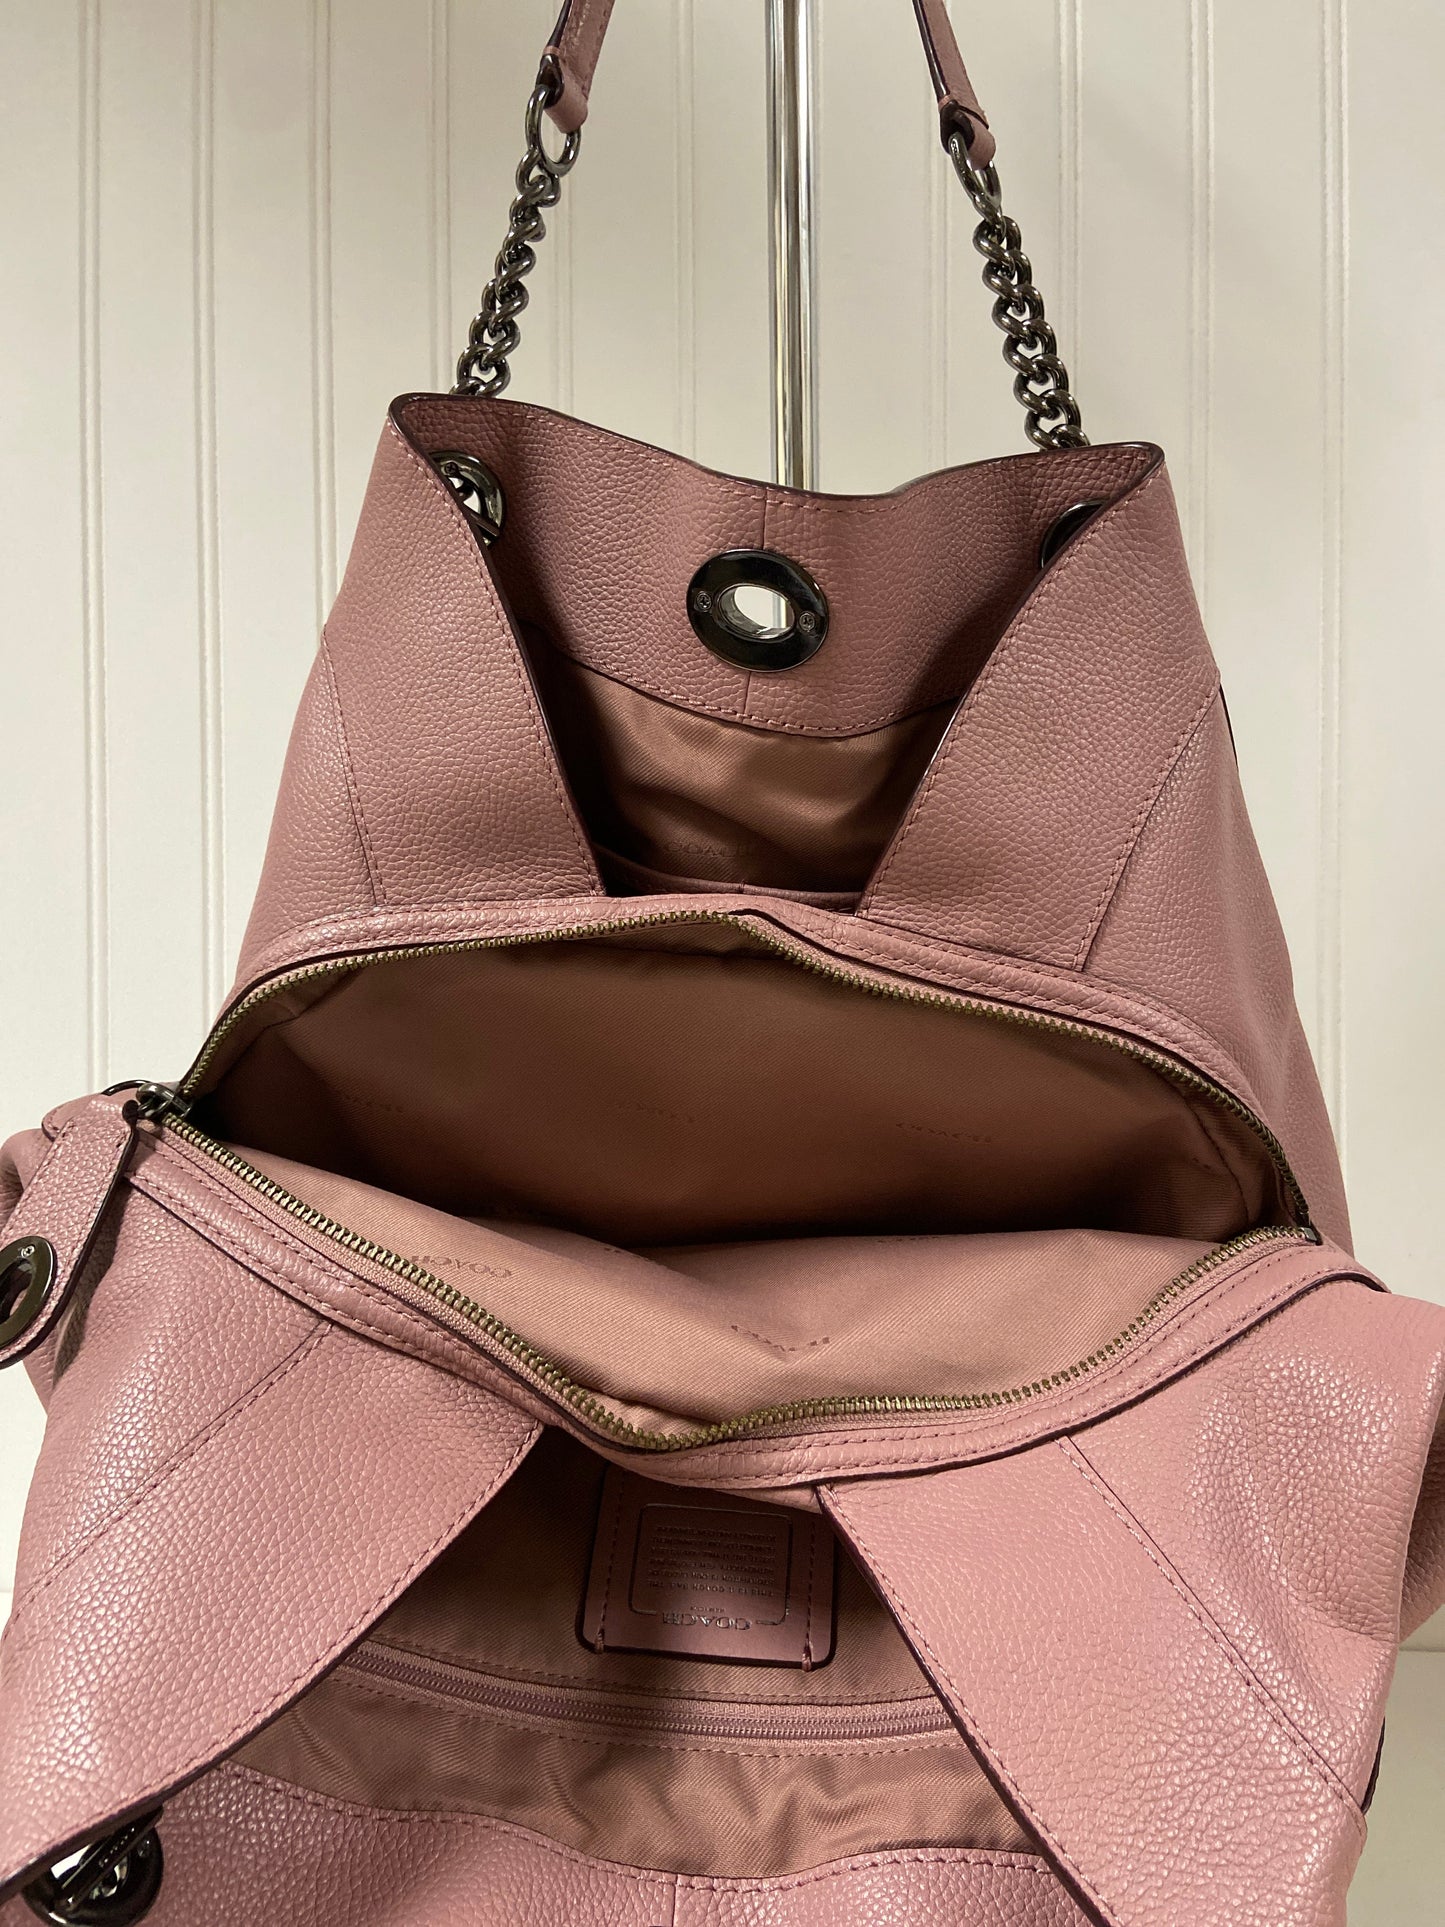 Handbag Designer Coach, Size Medium